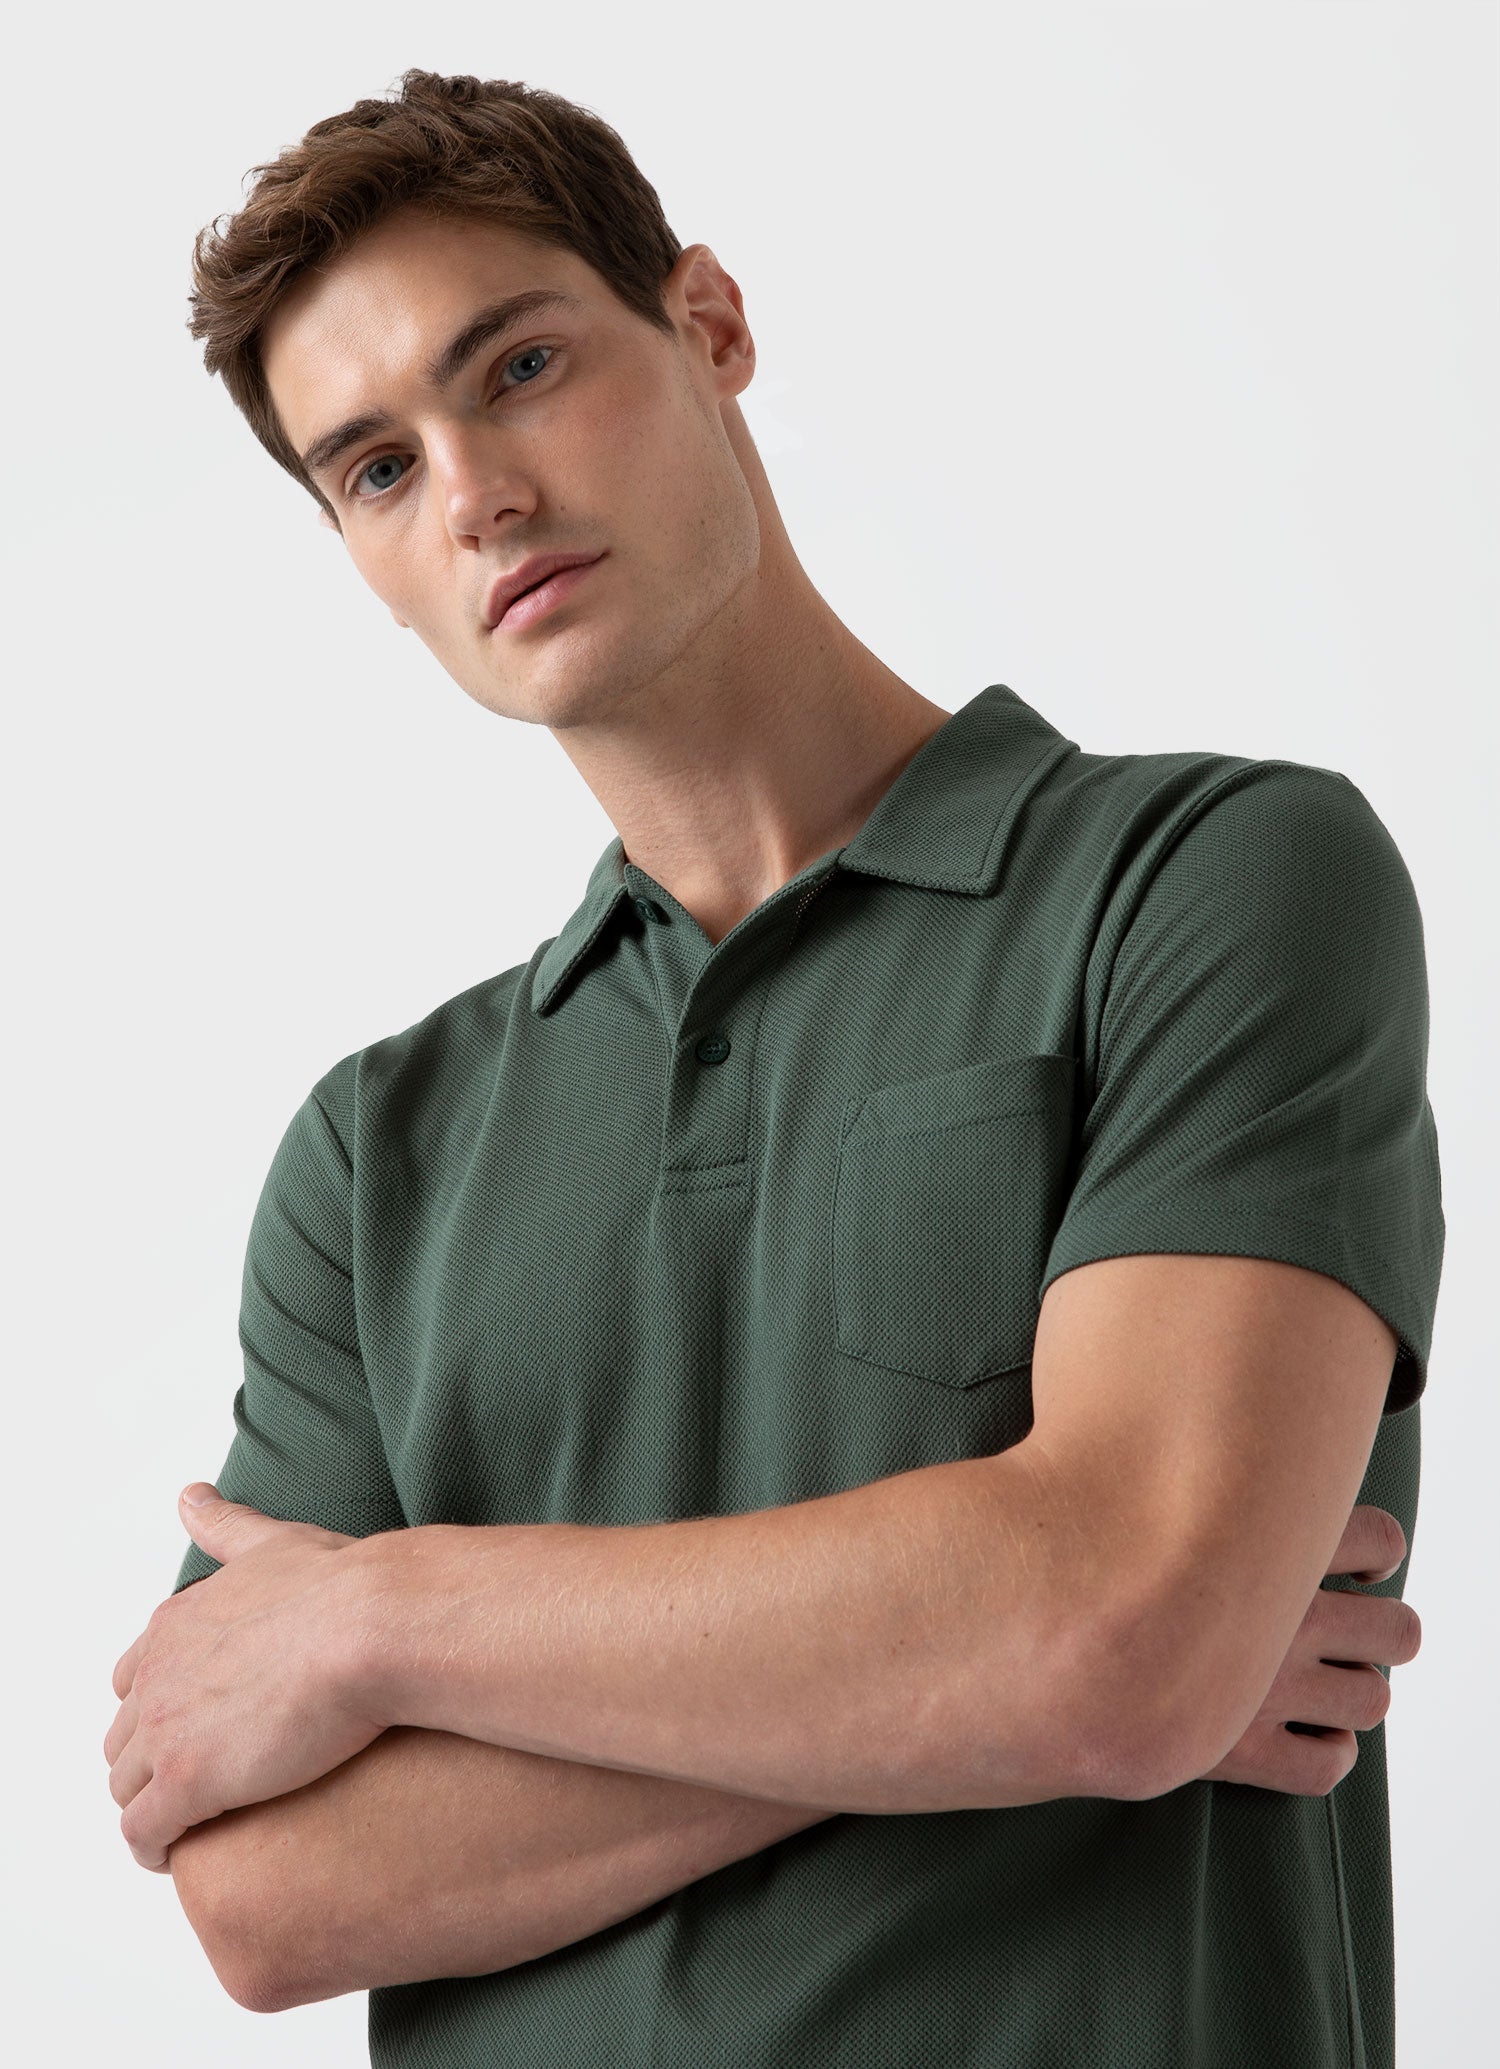 Men's Riviera Polo Shirt in Dark Green